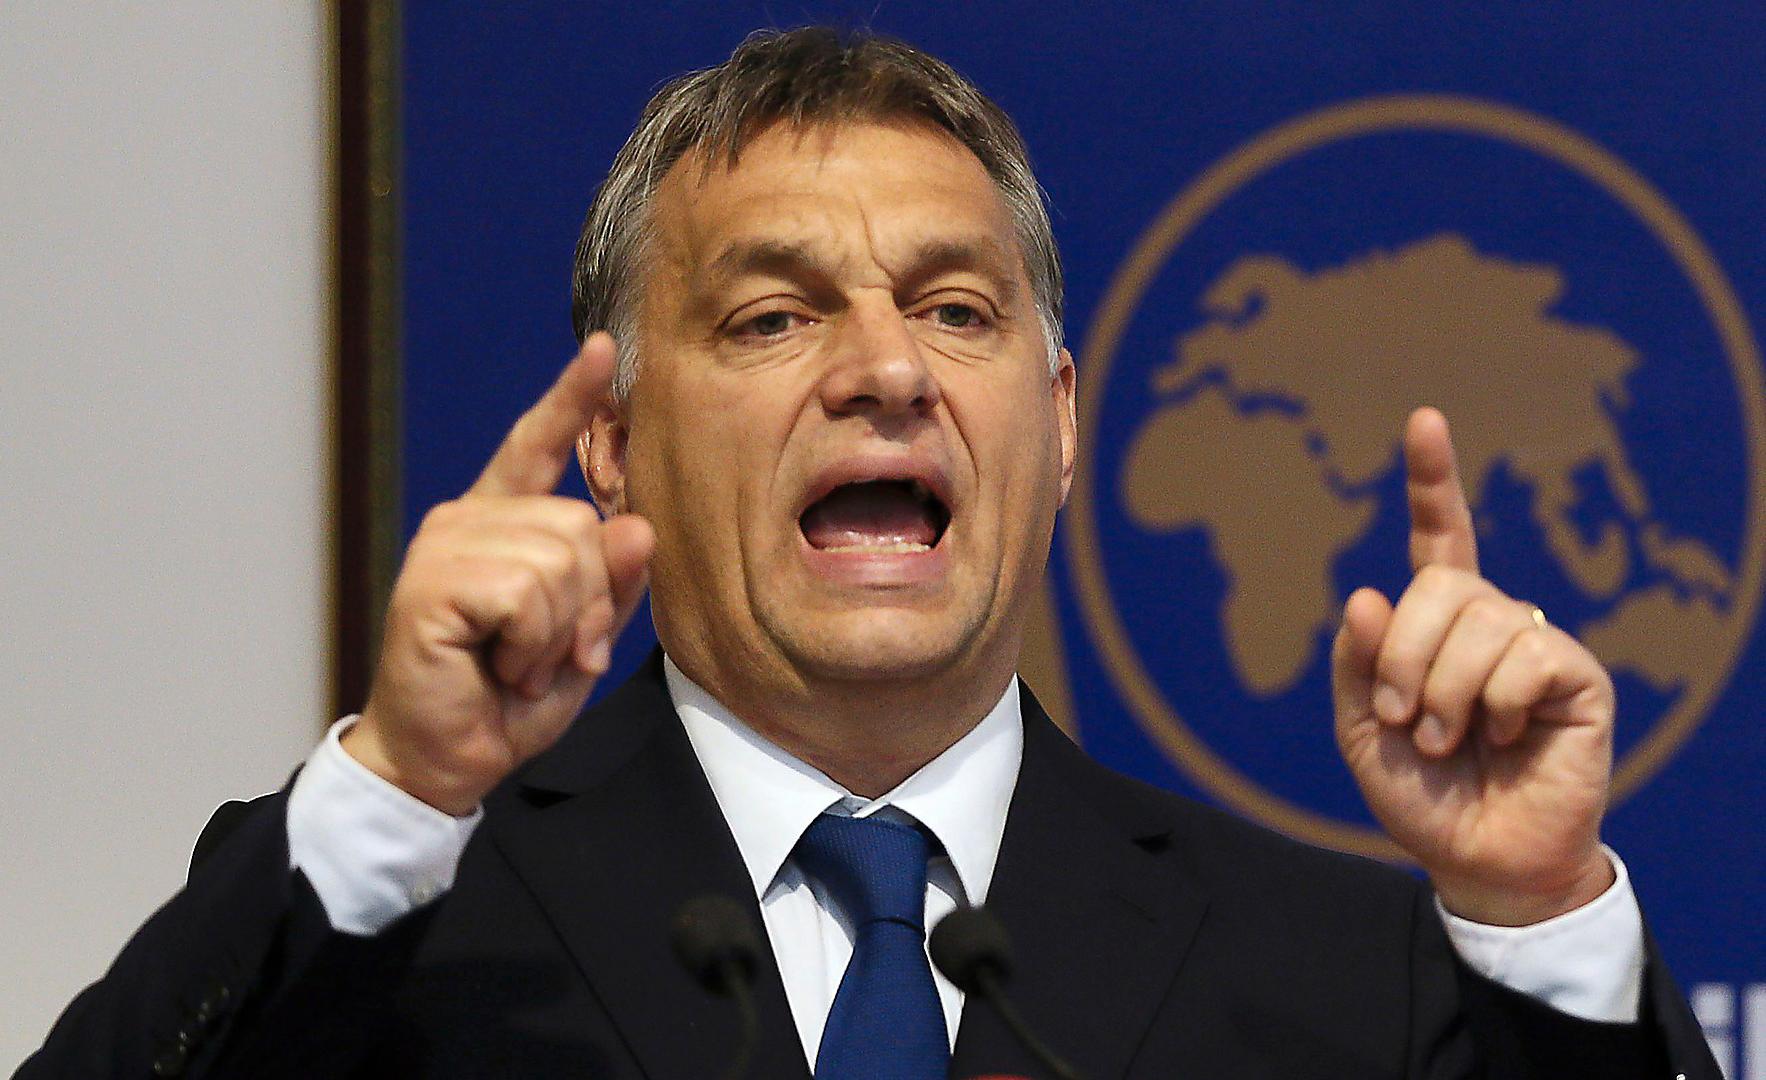 Viktor Orbán, Ungerns premiärminister.